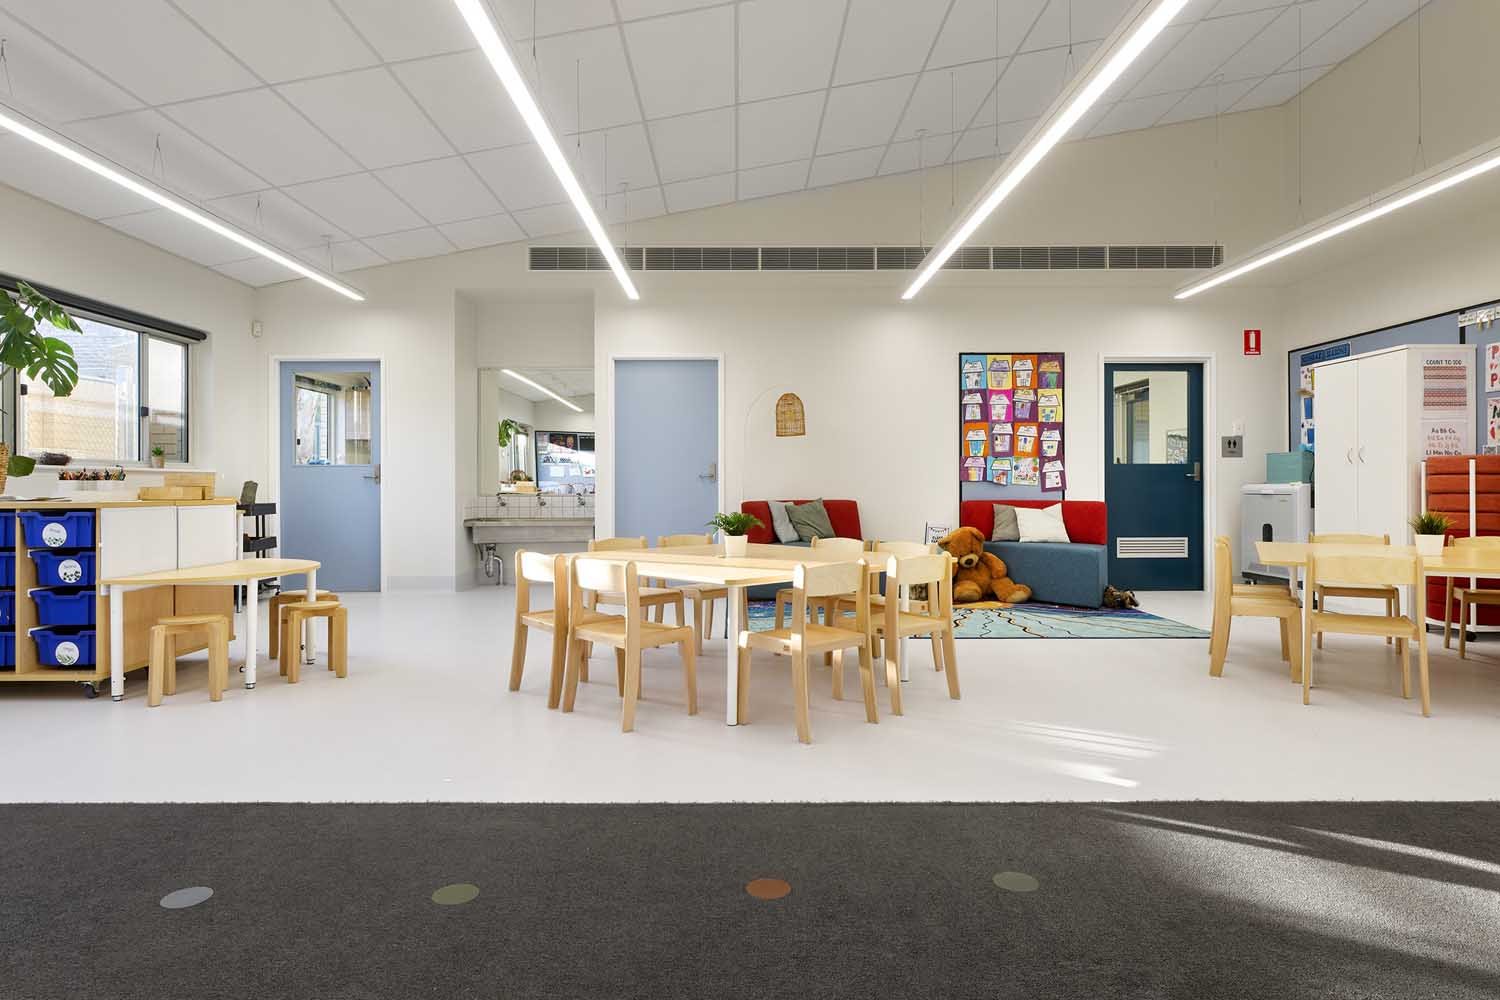 architecture_building_victoria_park_primary_school_design_interior_classroom_layout_furniture.jpg